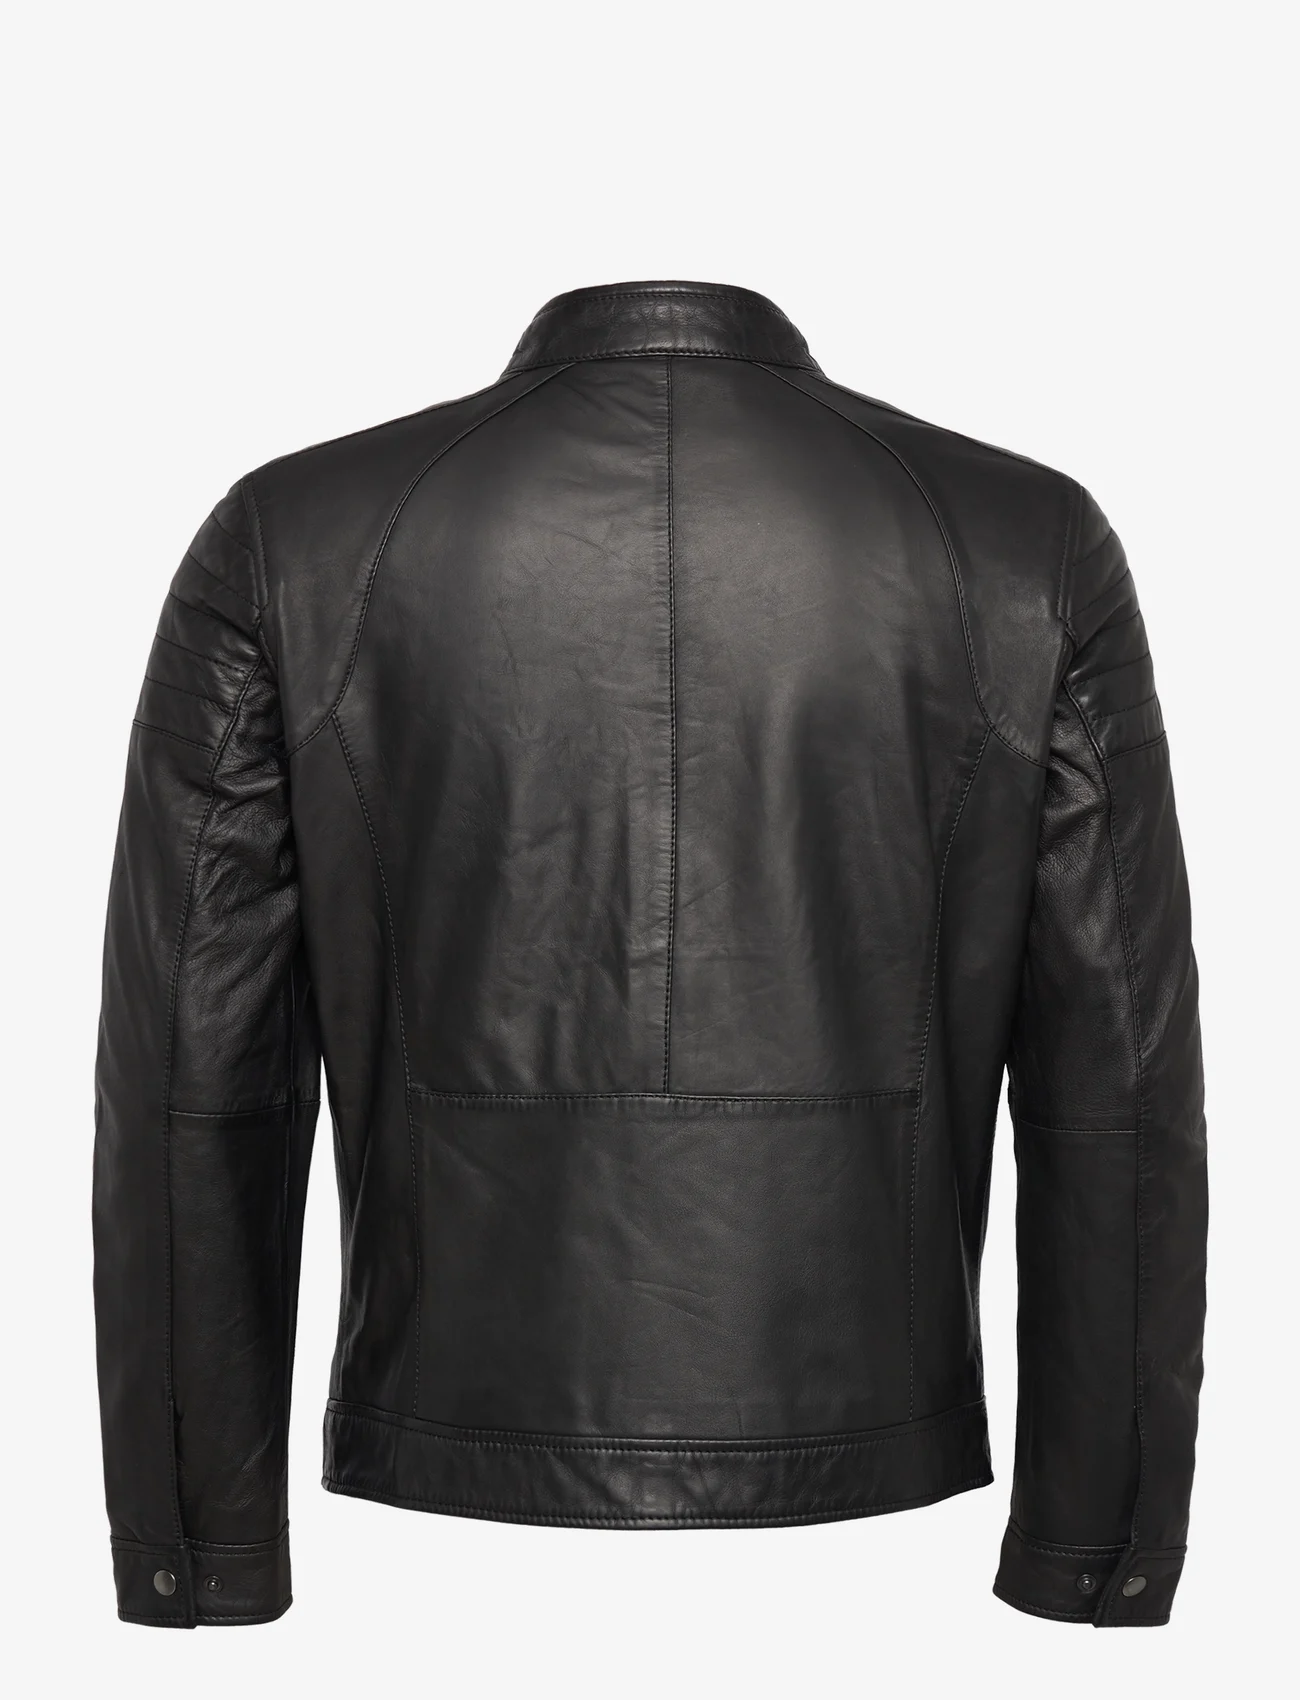 Jofama - Costner Zipped Leather Jacket - frühlingsjacken - black - 1